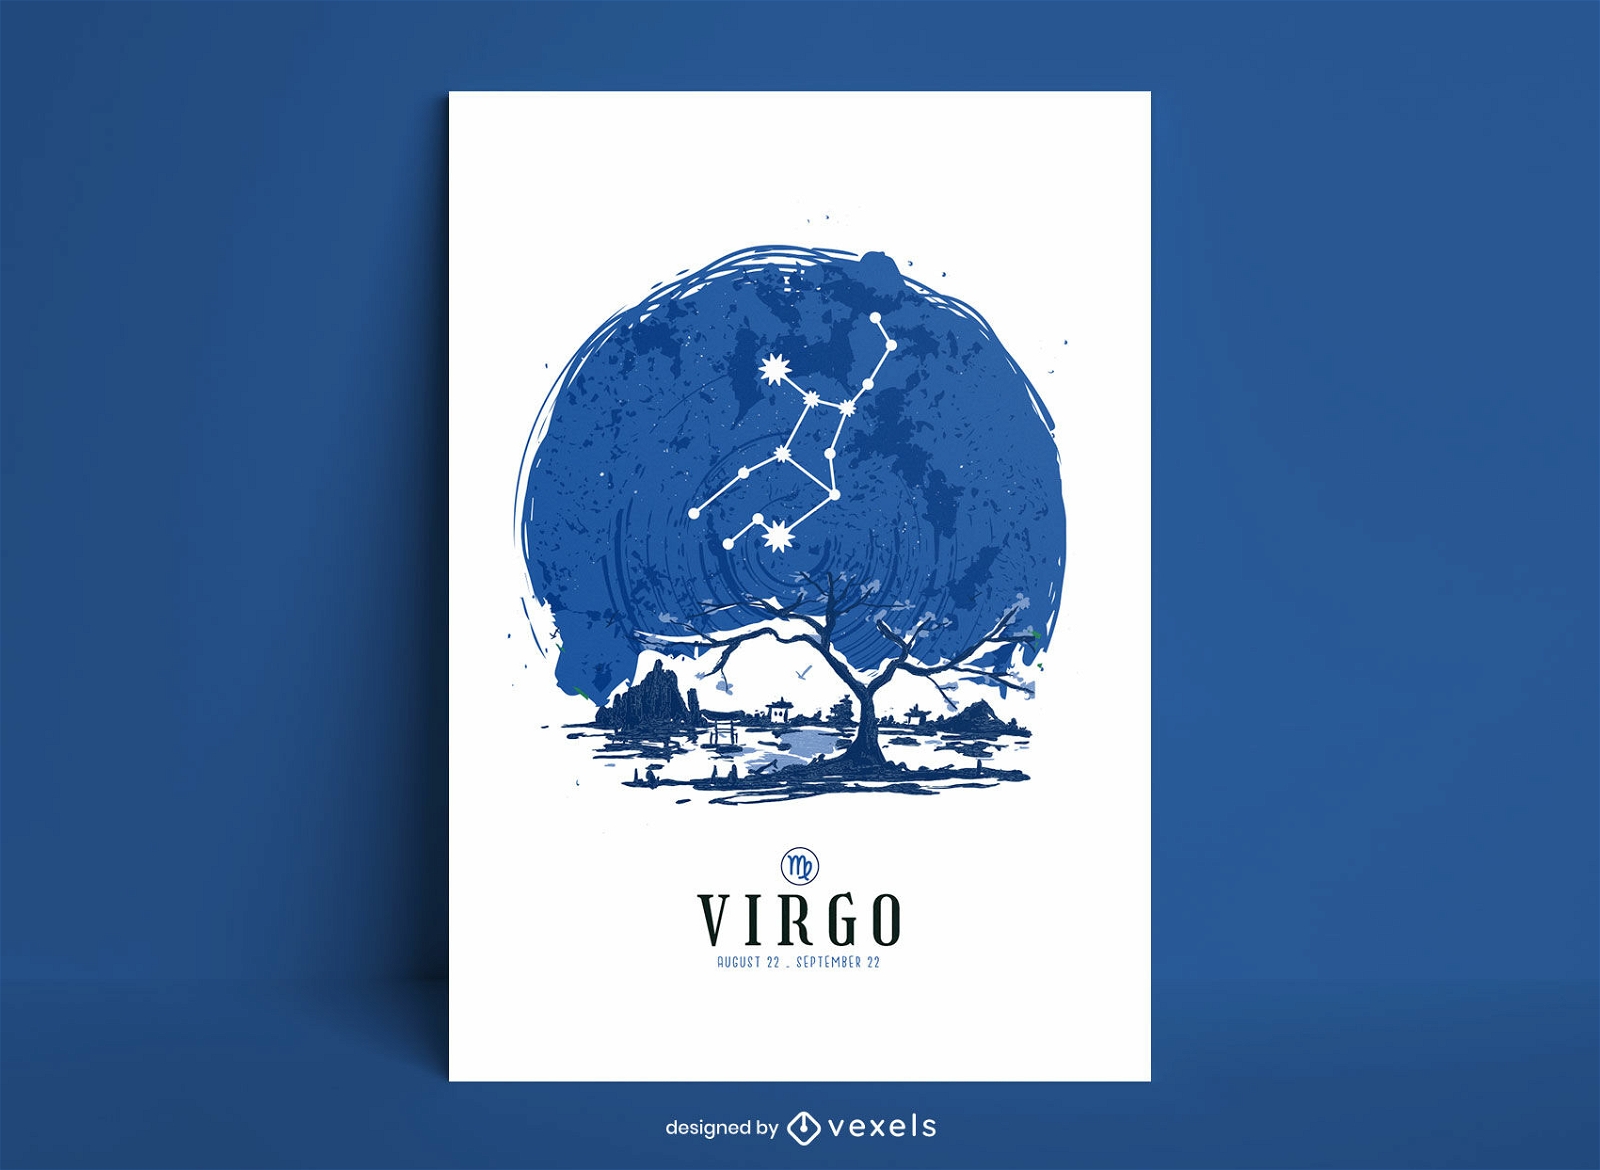 Virgo constellation zodiac poster template